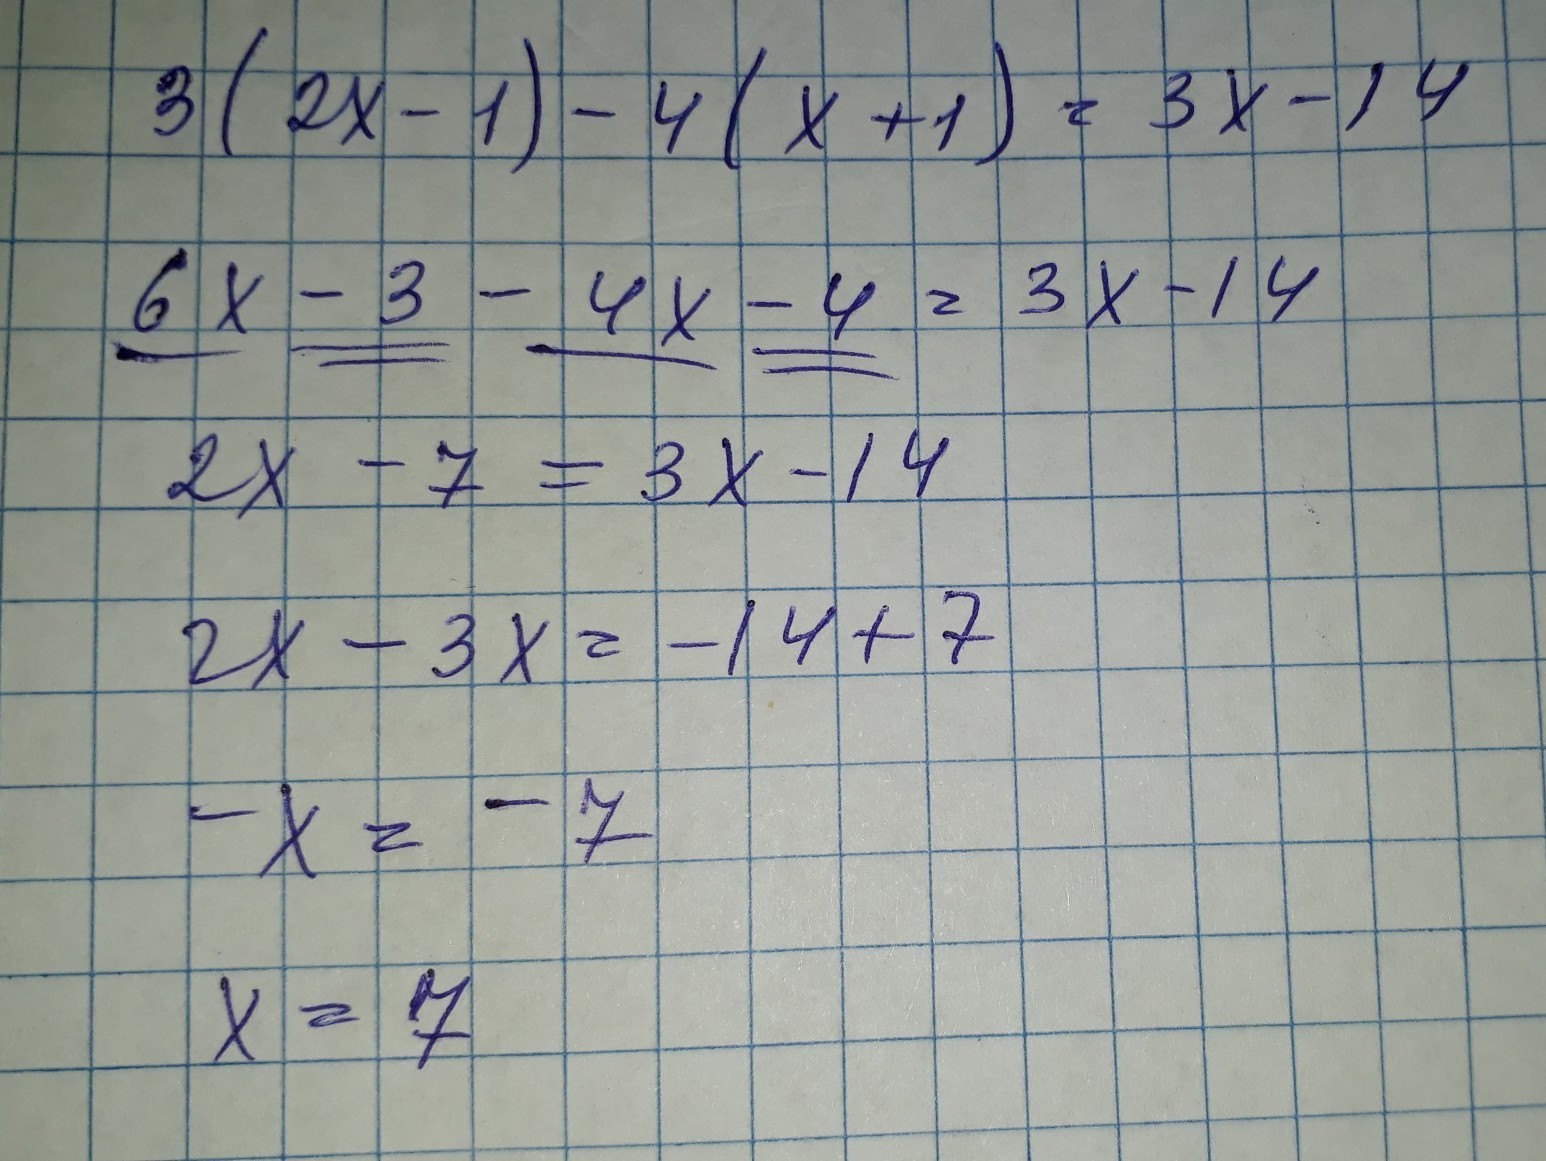 7x 14 x 1 0. 3x+1. -2x-3=1. 14 X - X-1 +(2x. √(X-2√(X-1)) +√(X+3-4√(X-1)) =1.